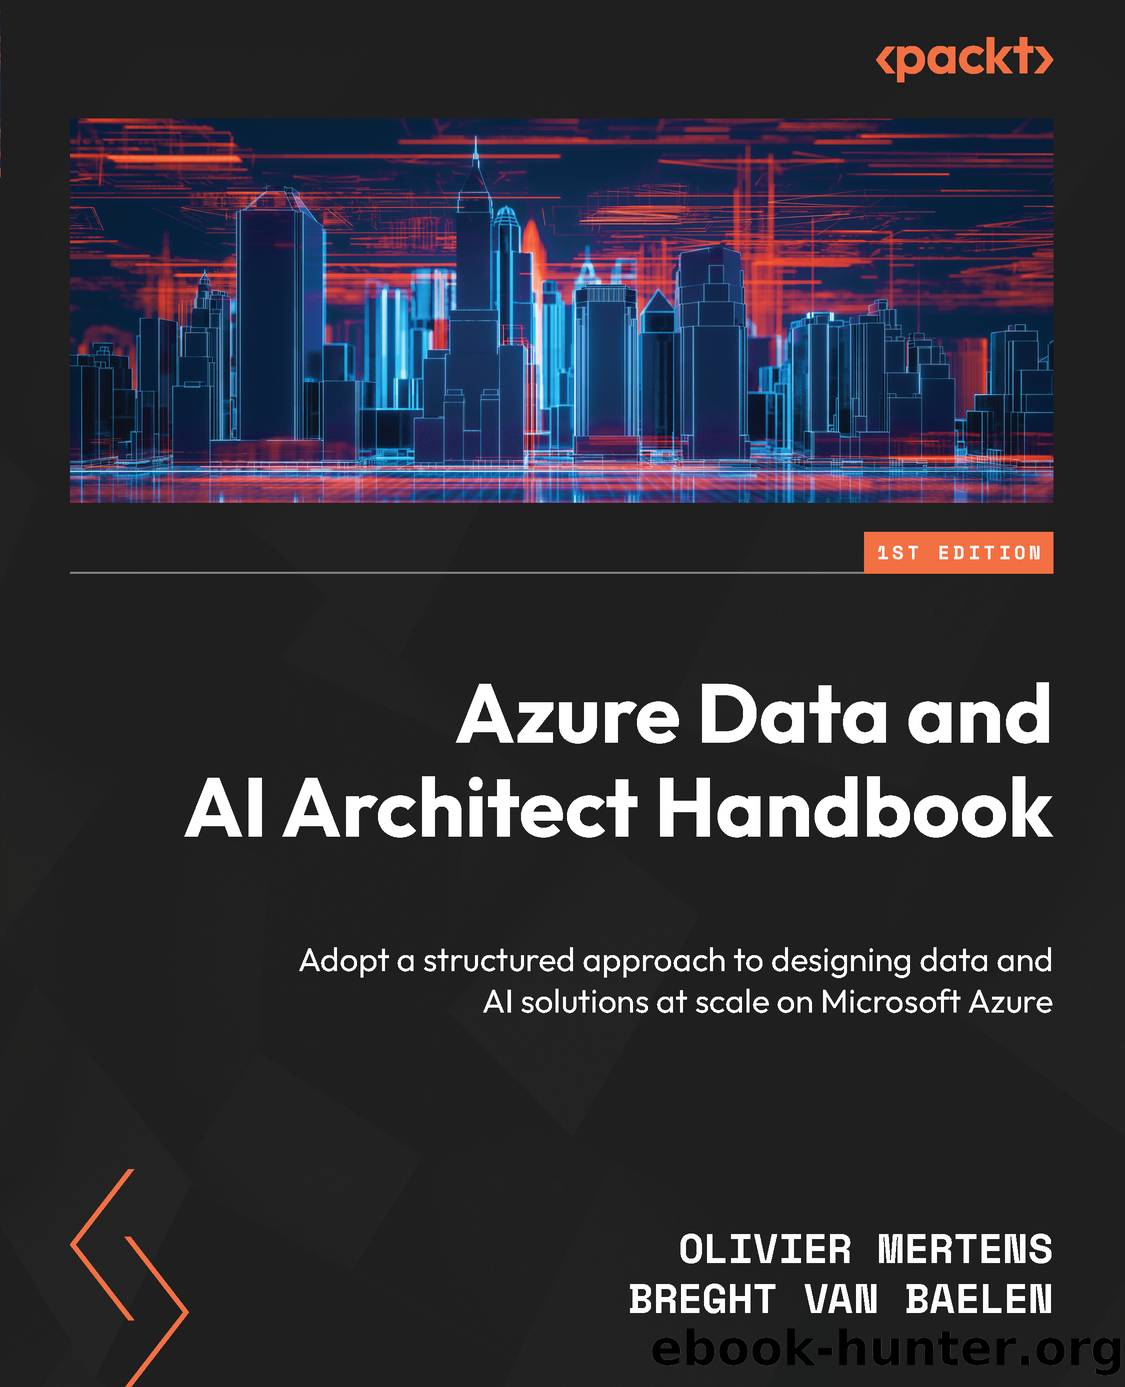 Azure Data and AI Architect Handbook by Olivier Mertens & Breght Van Baelen